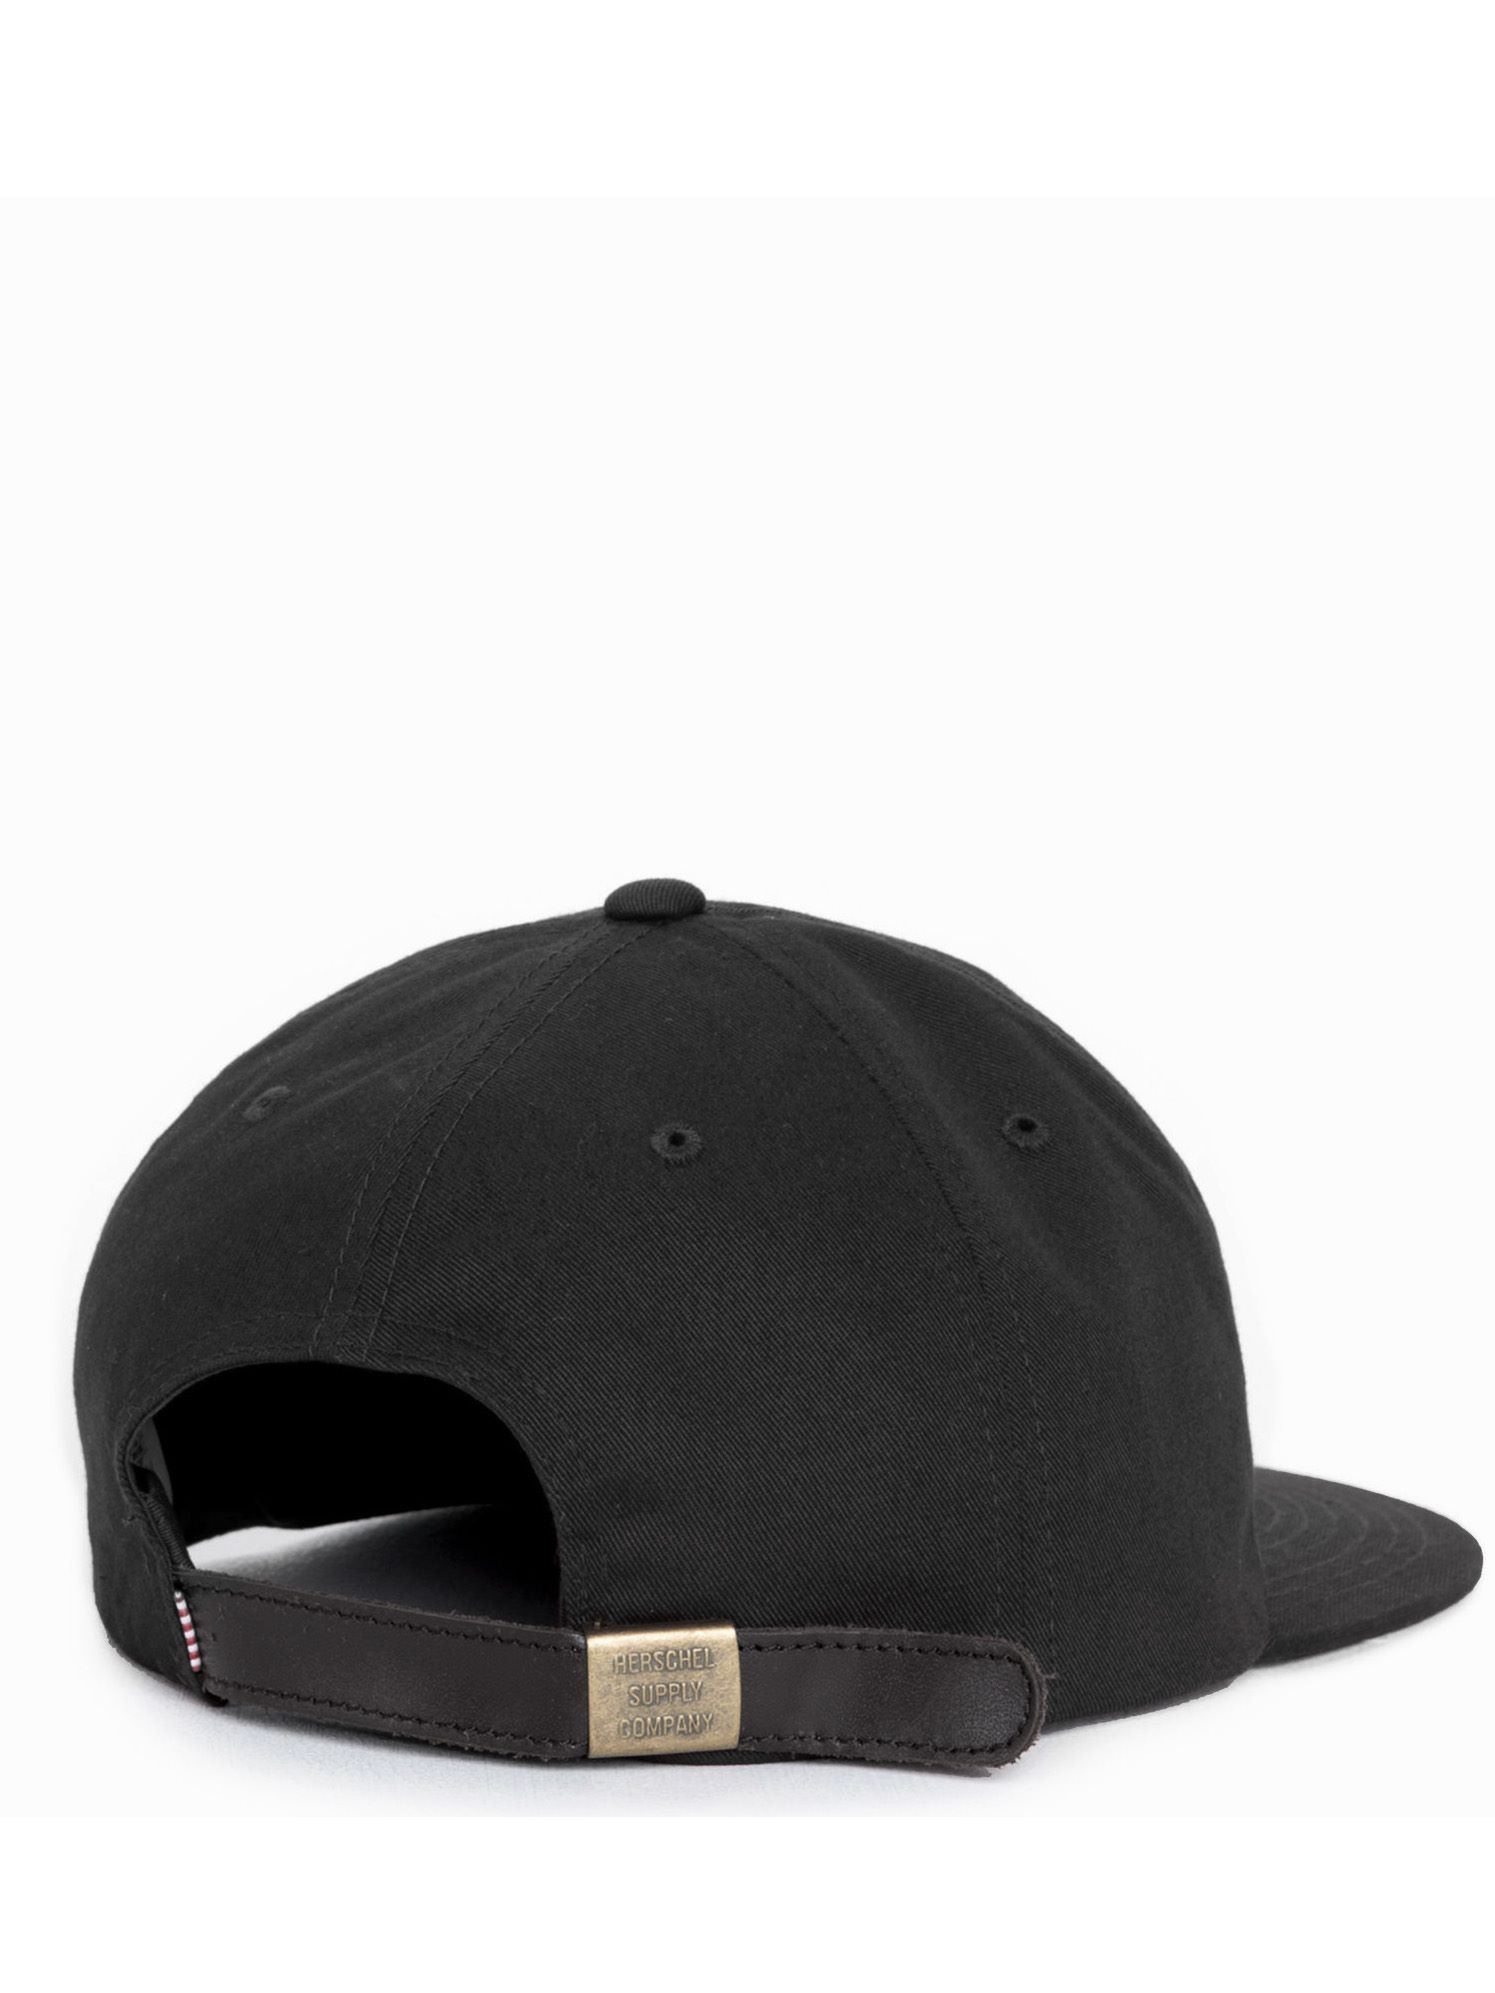 Herschel Harwood hat black | Dapper Street